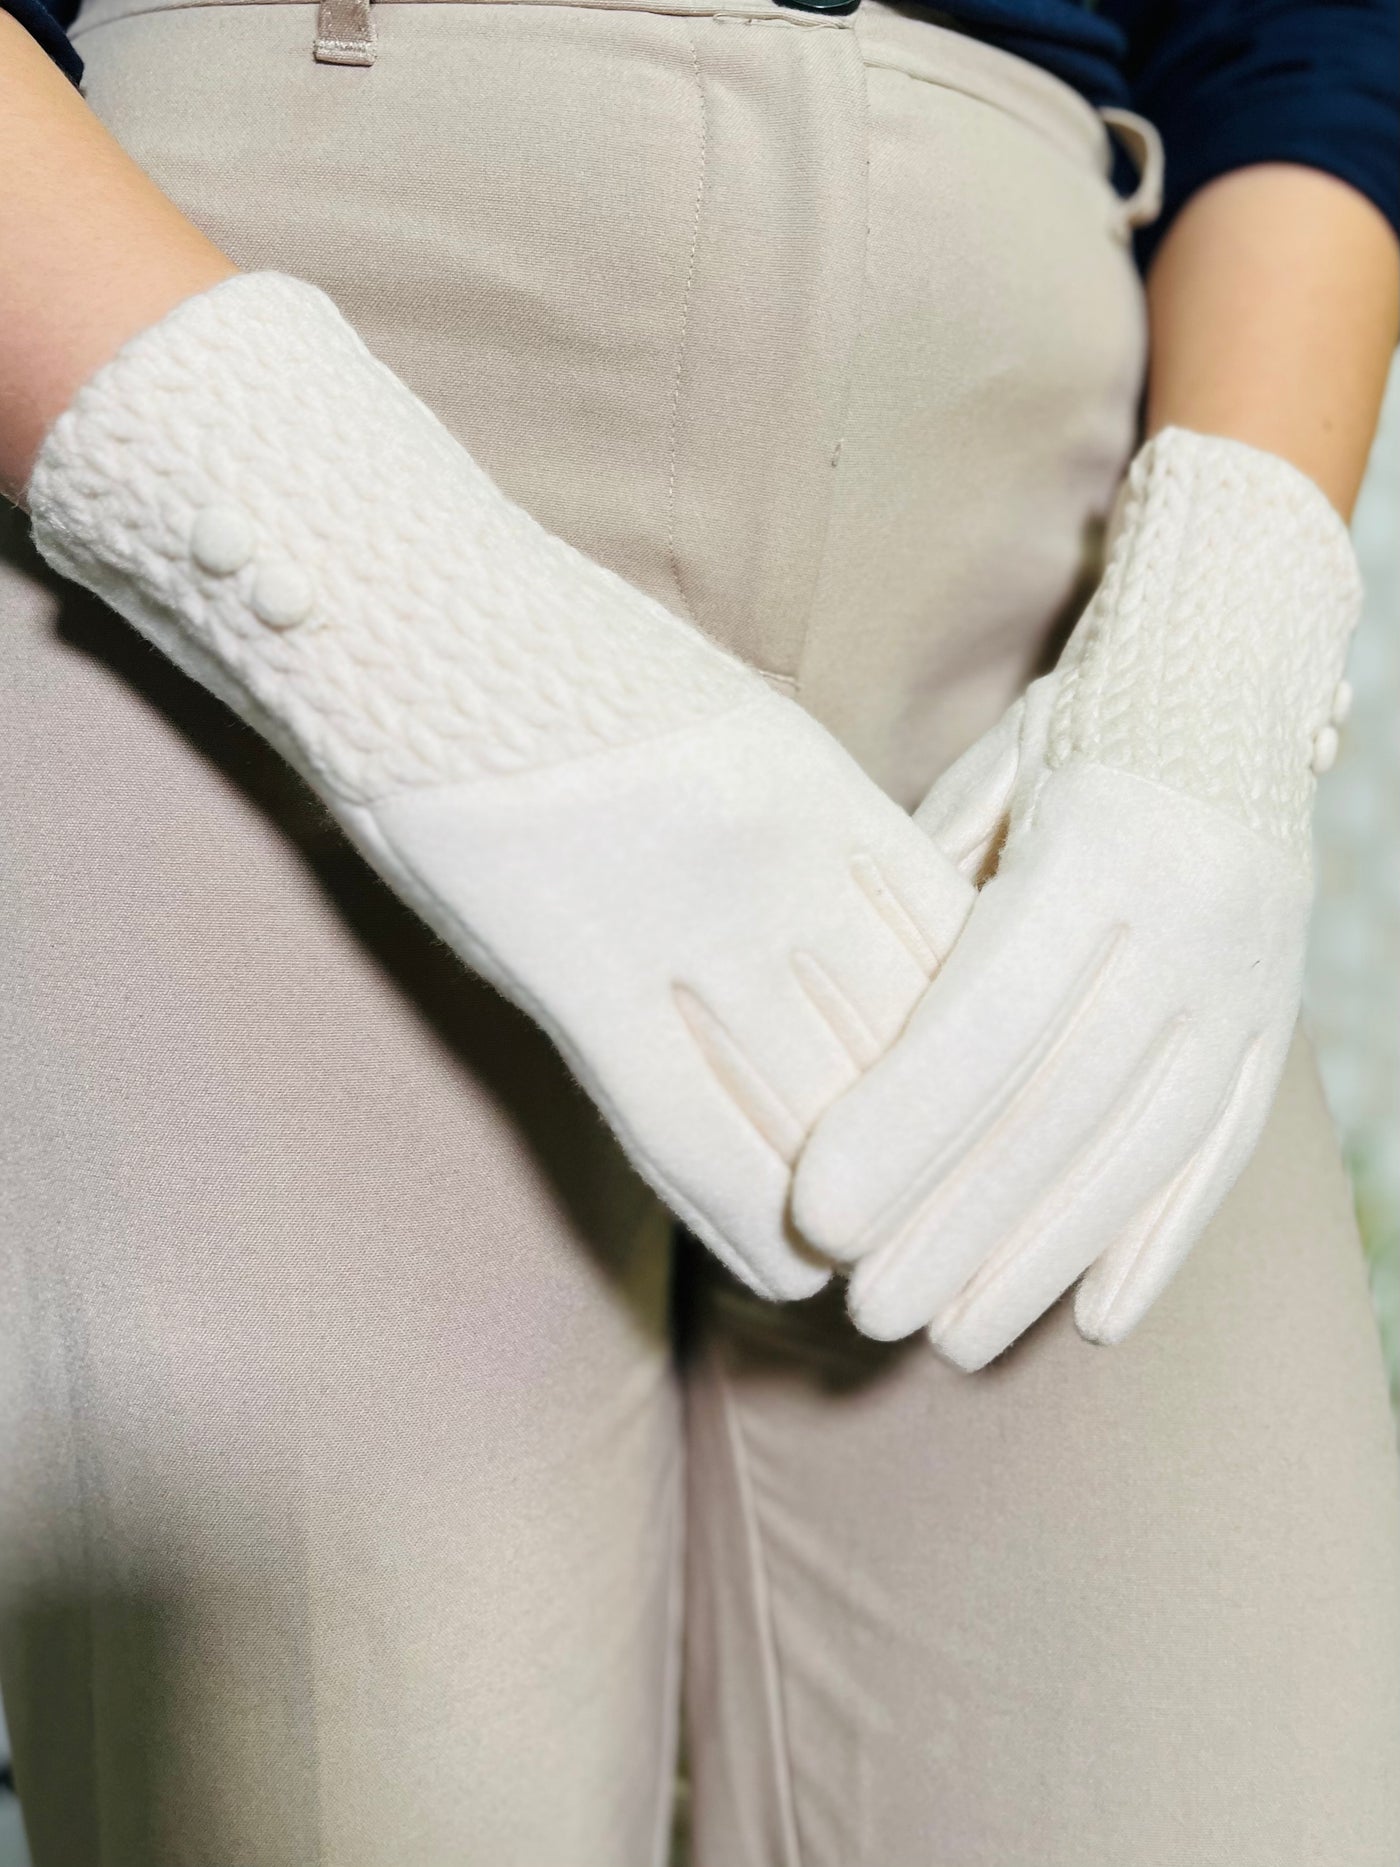 Knitted Gloves-Cream